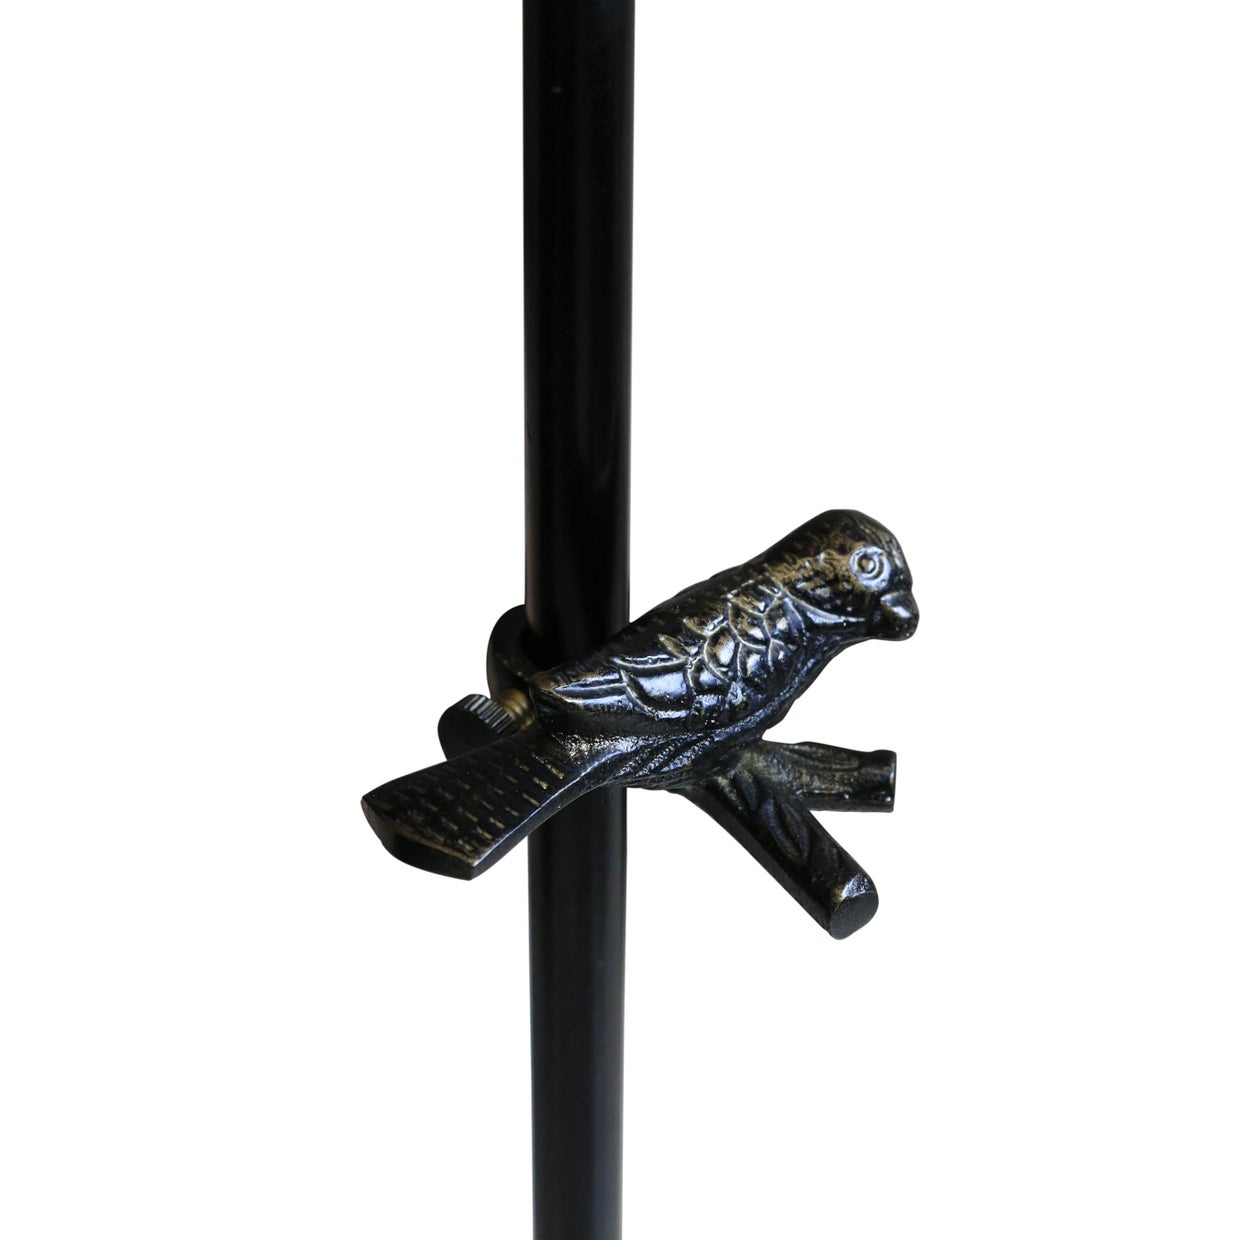 LAMP BASE WITH BIRD IN DARK BRONZE STYLE FINISH